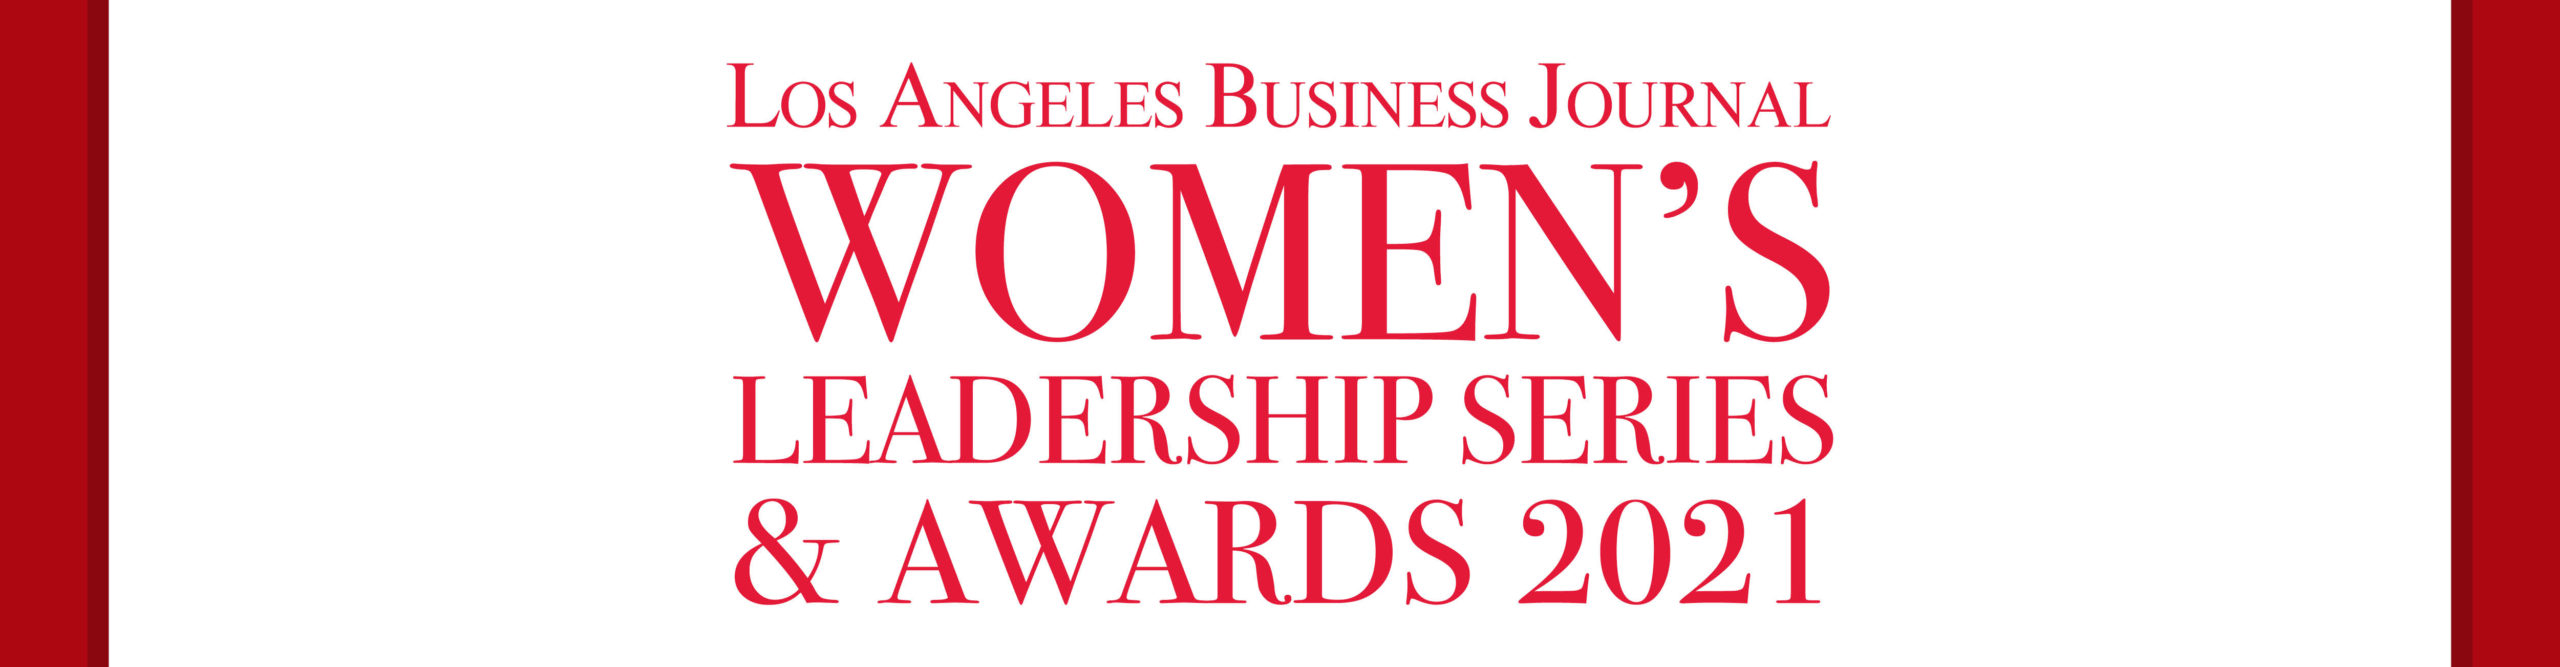 Women’s Leadership Series & Awards 2021